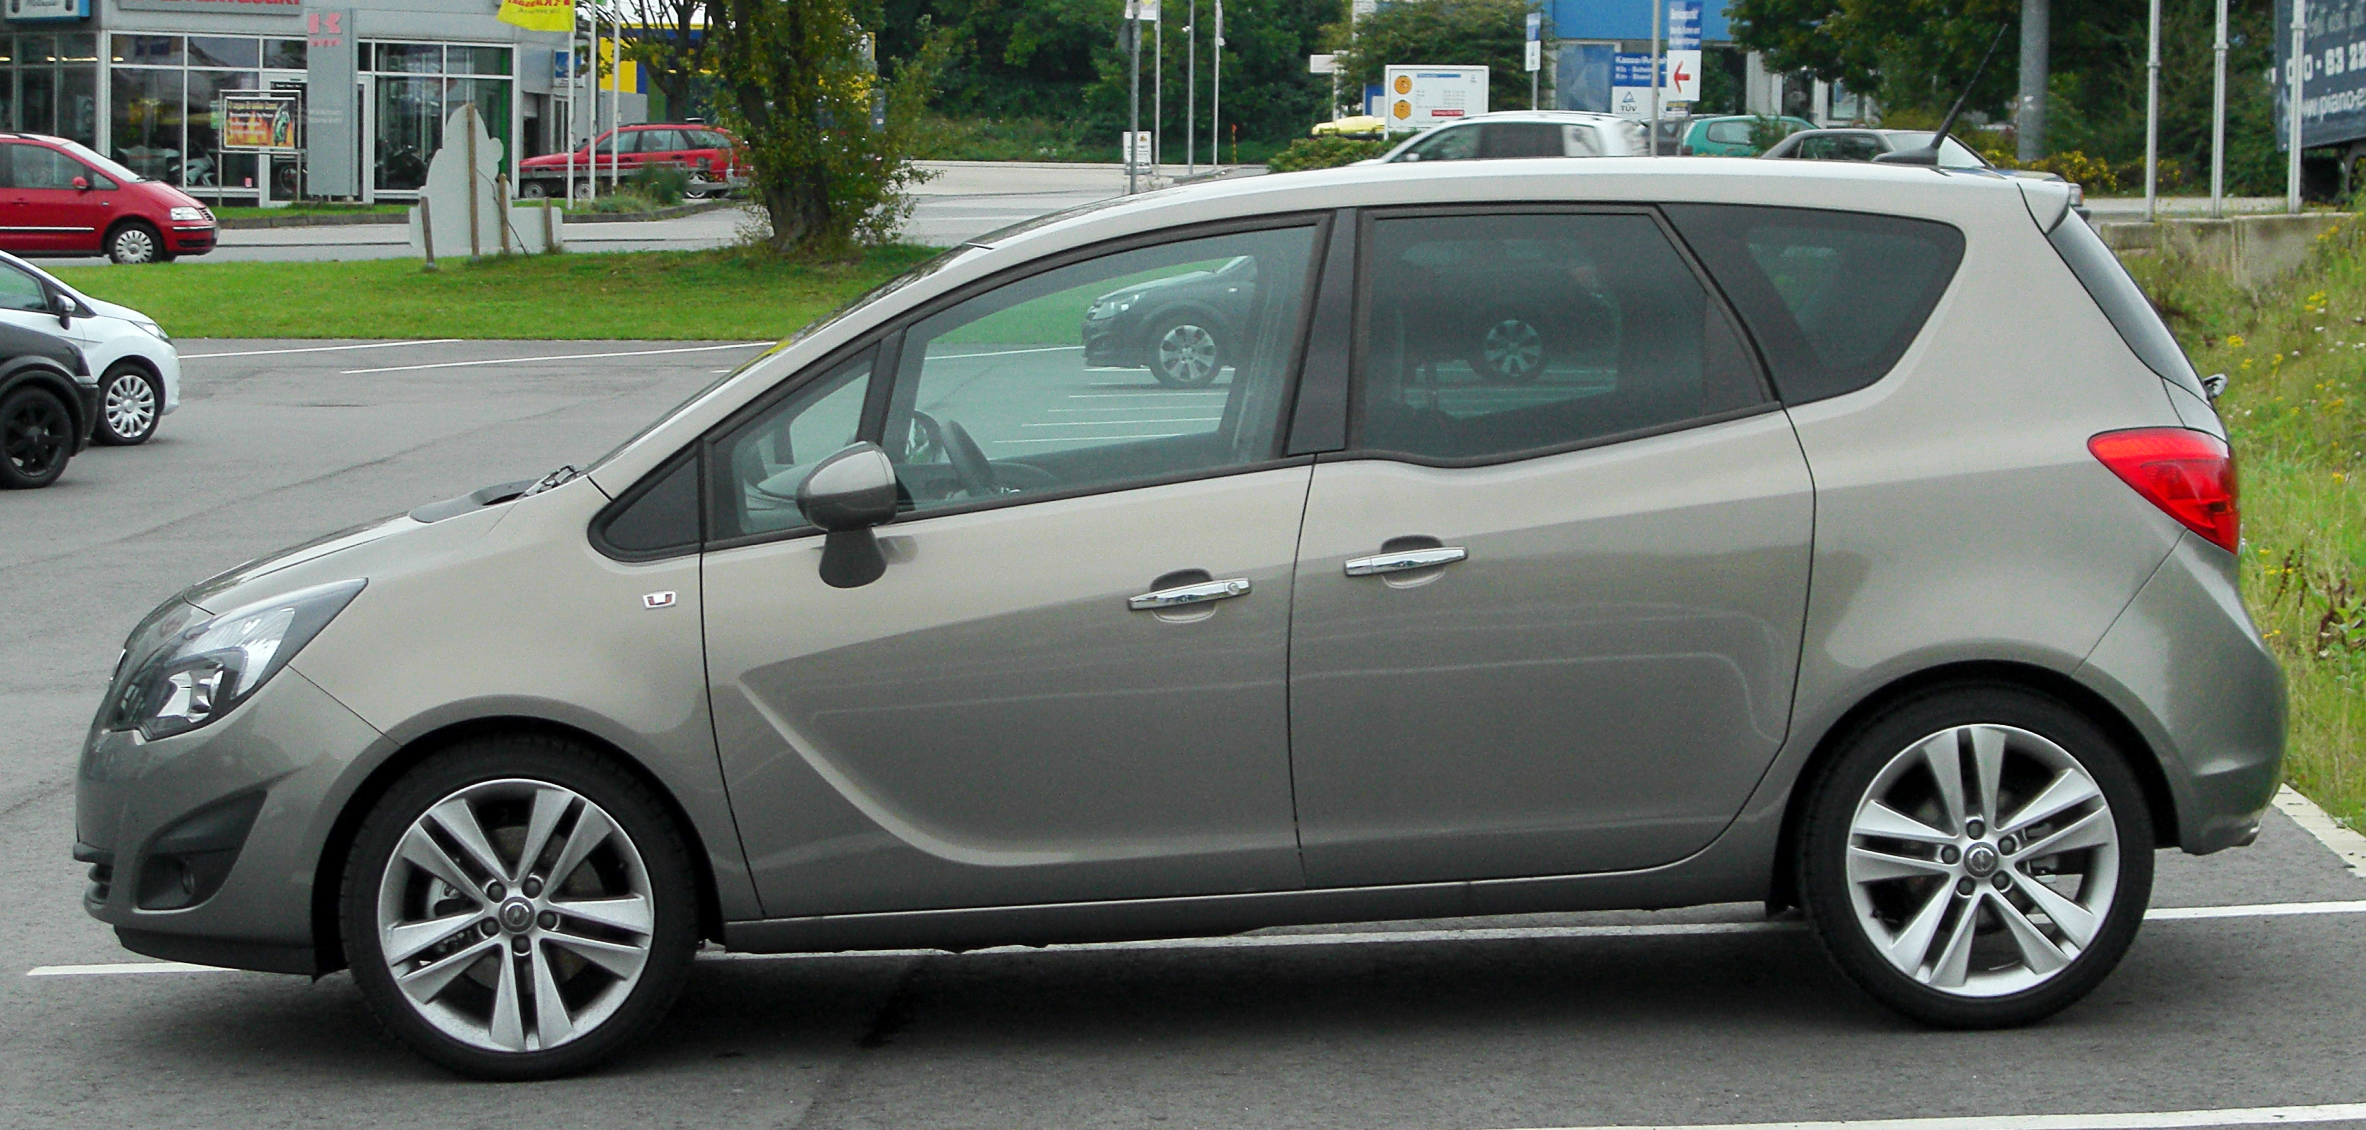 Images of Opel Meriva (B) 2013 (1600x1200)